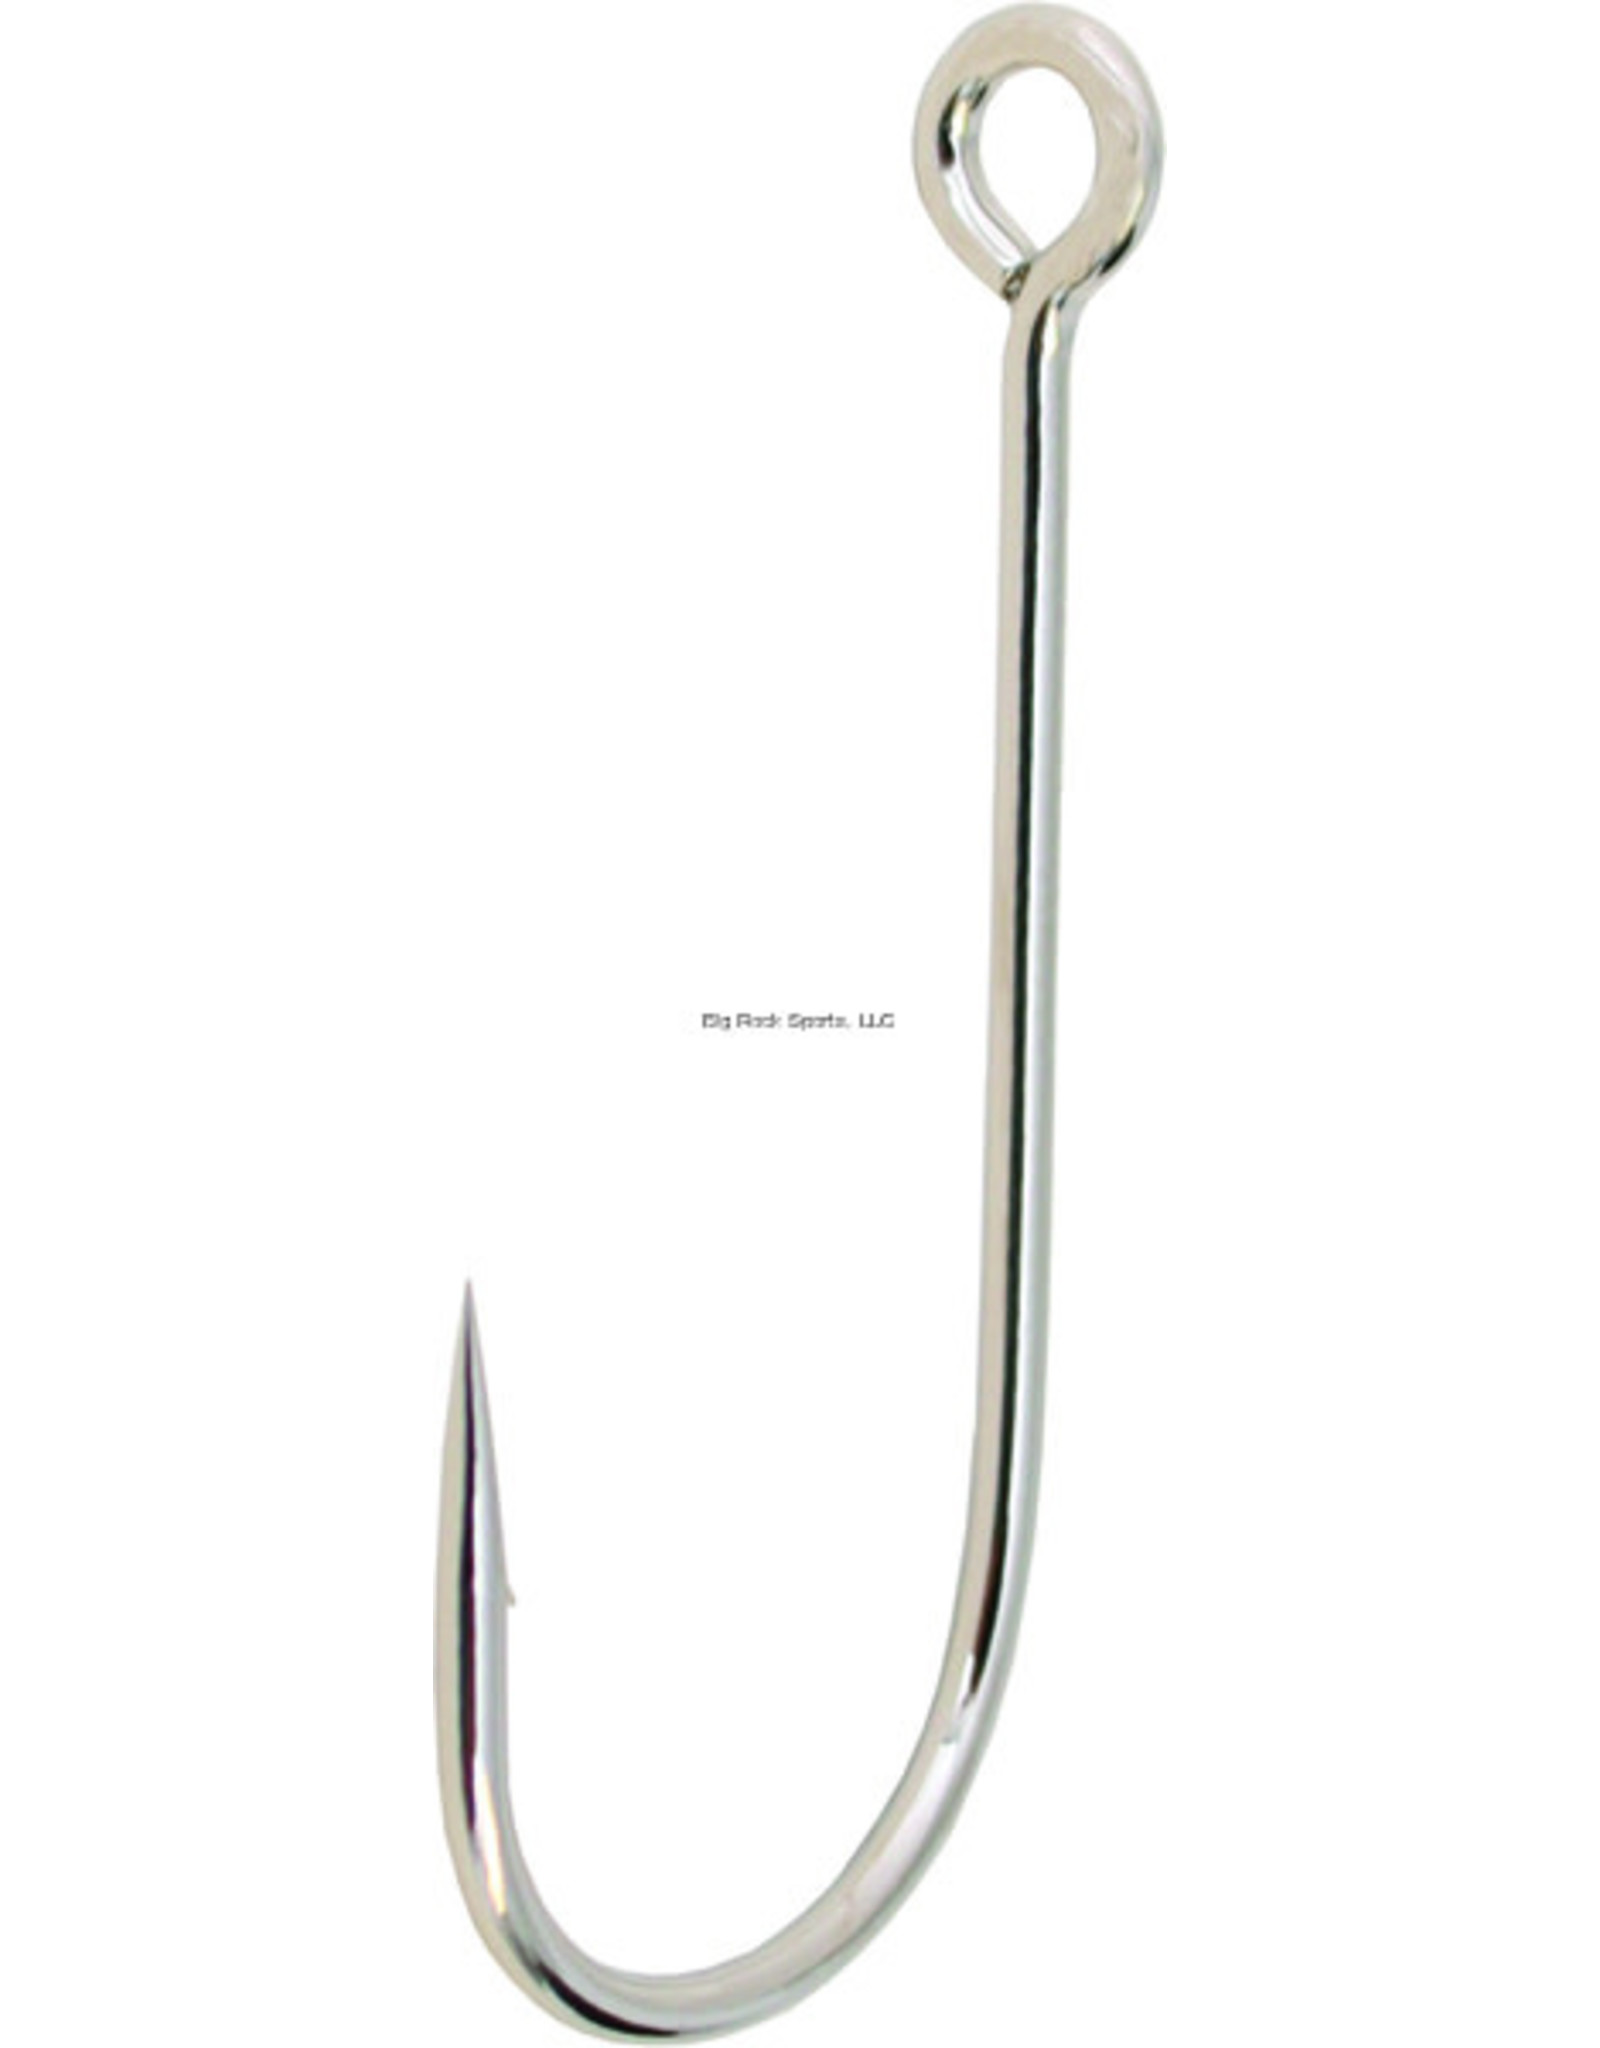 Gamakatsu 210013 Spinner Bait Trailer Hook, Size 3/0, Needle Point